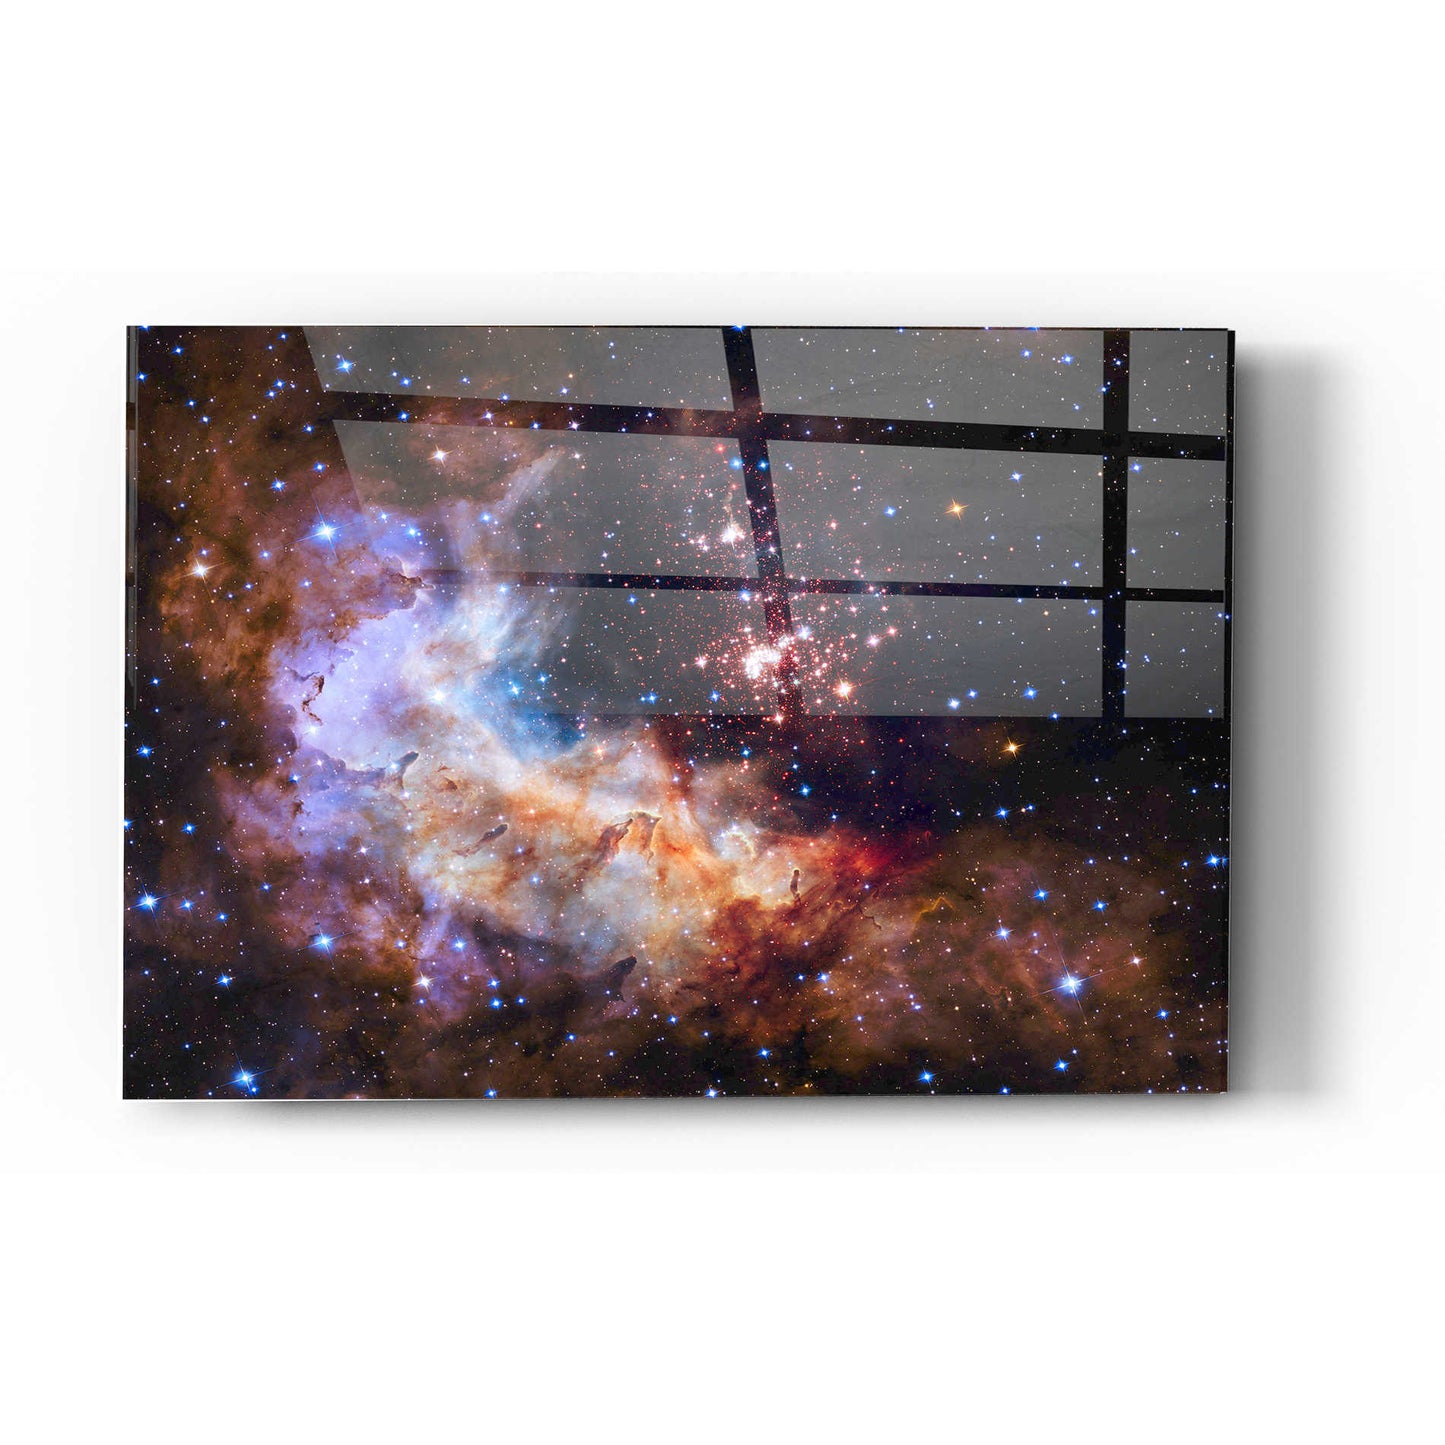 Epic Art 'Celestial Fireworks' Hubble Space Telescope Acrylic Glass Wall Art,24x36